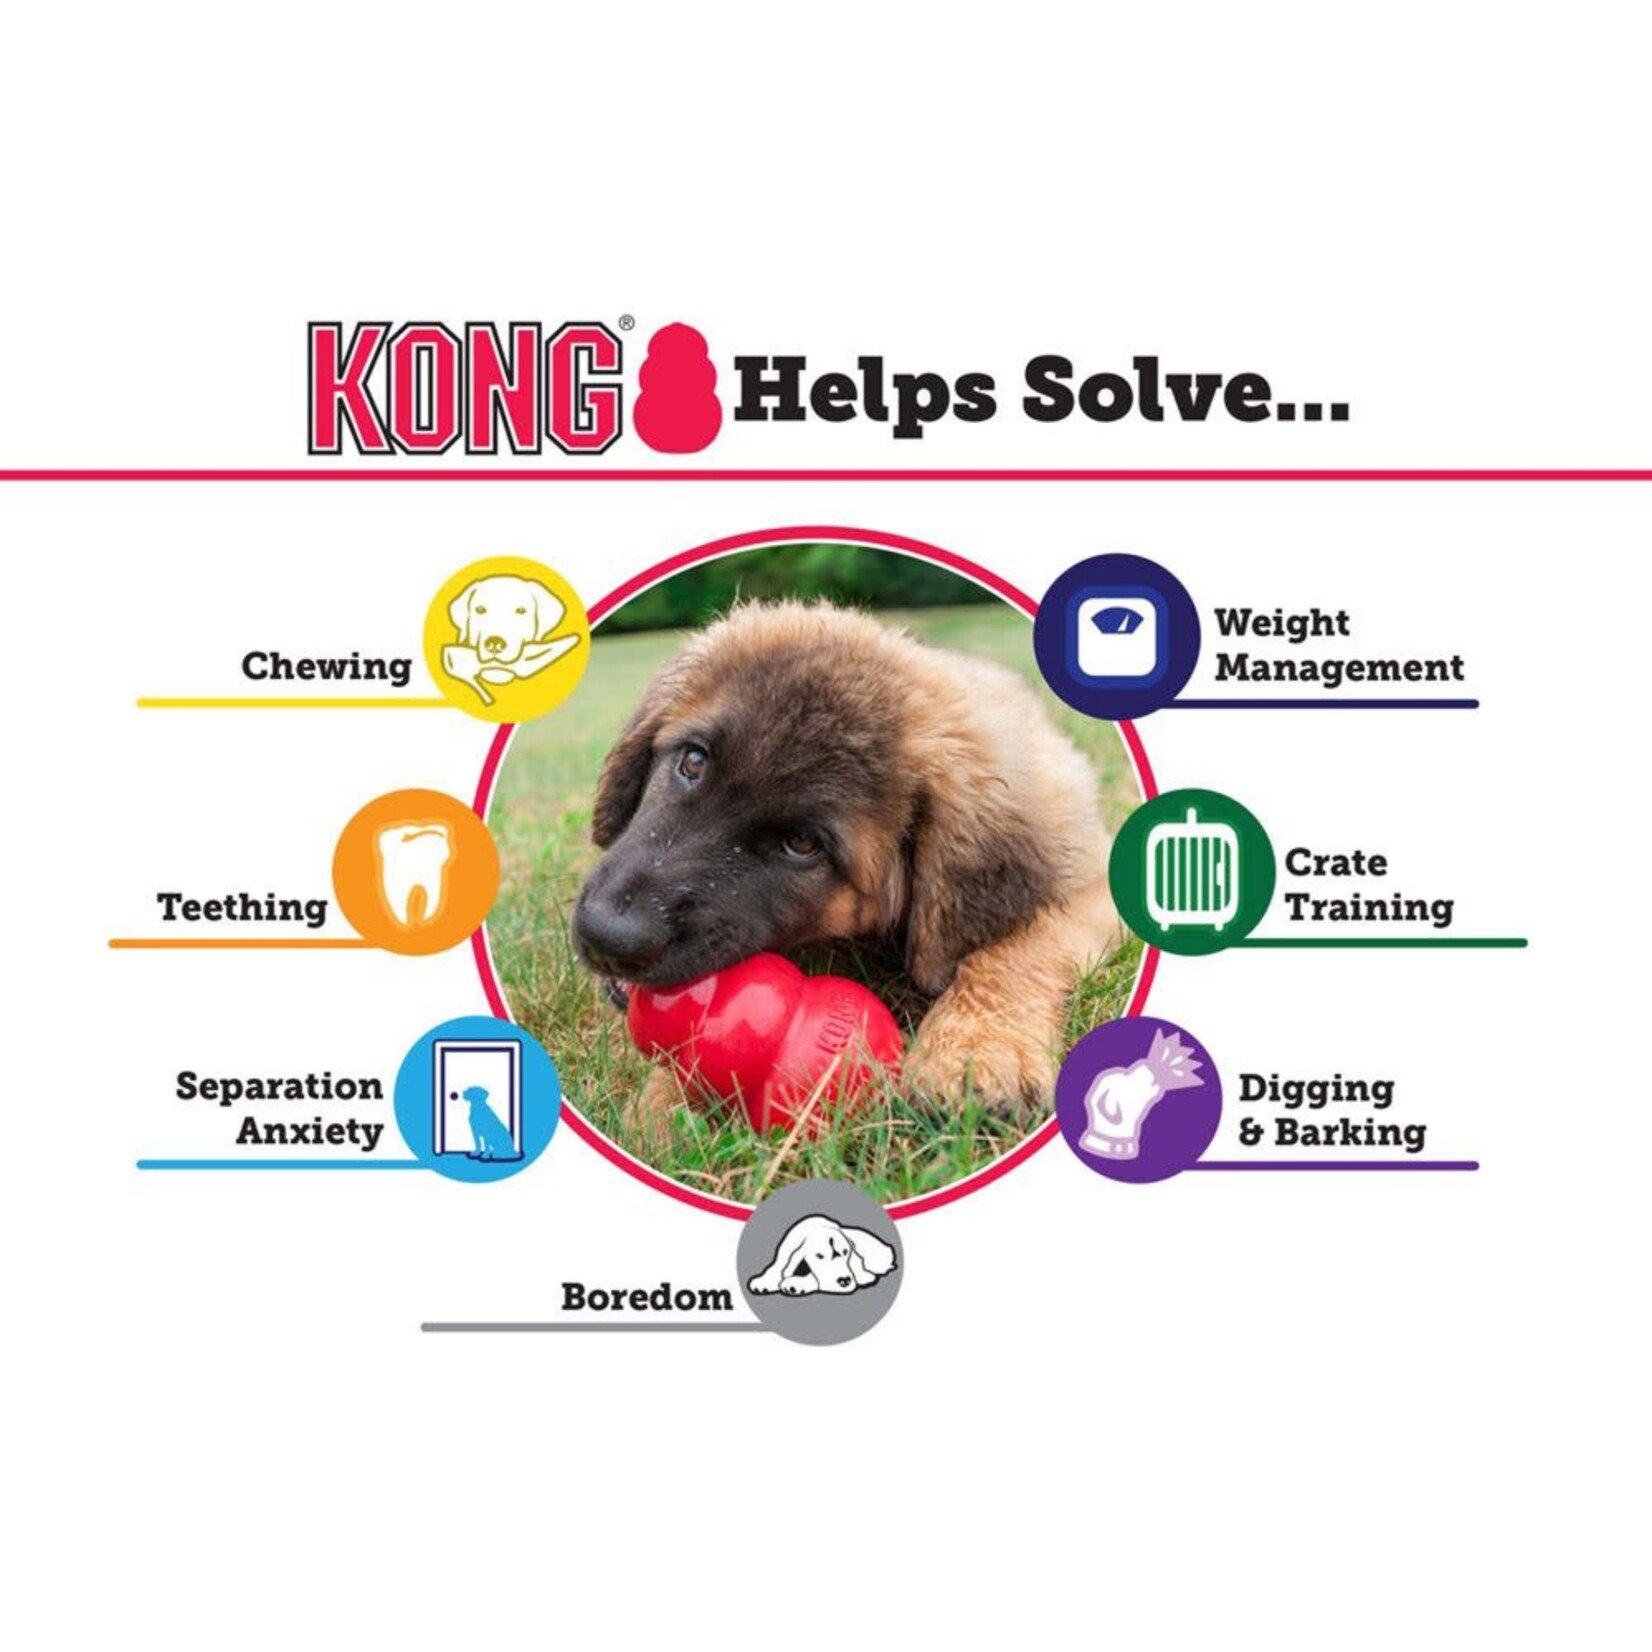 KONG KONG Puppy Dog Toy